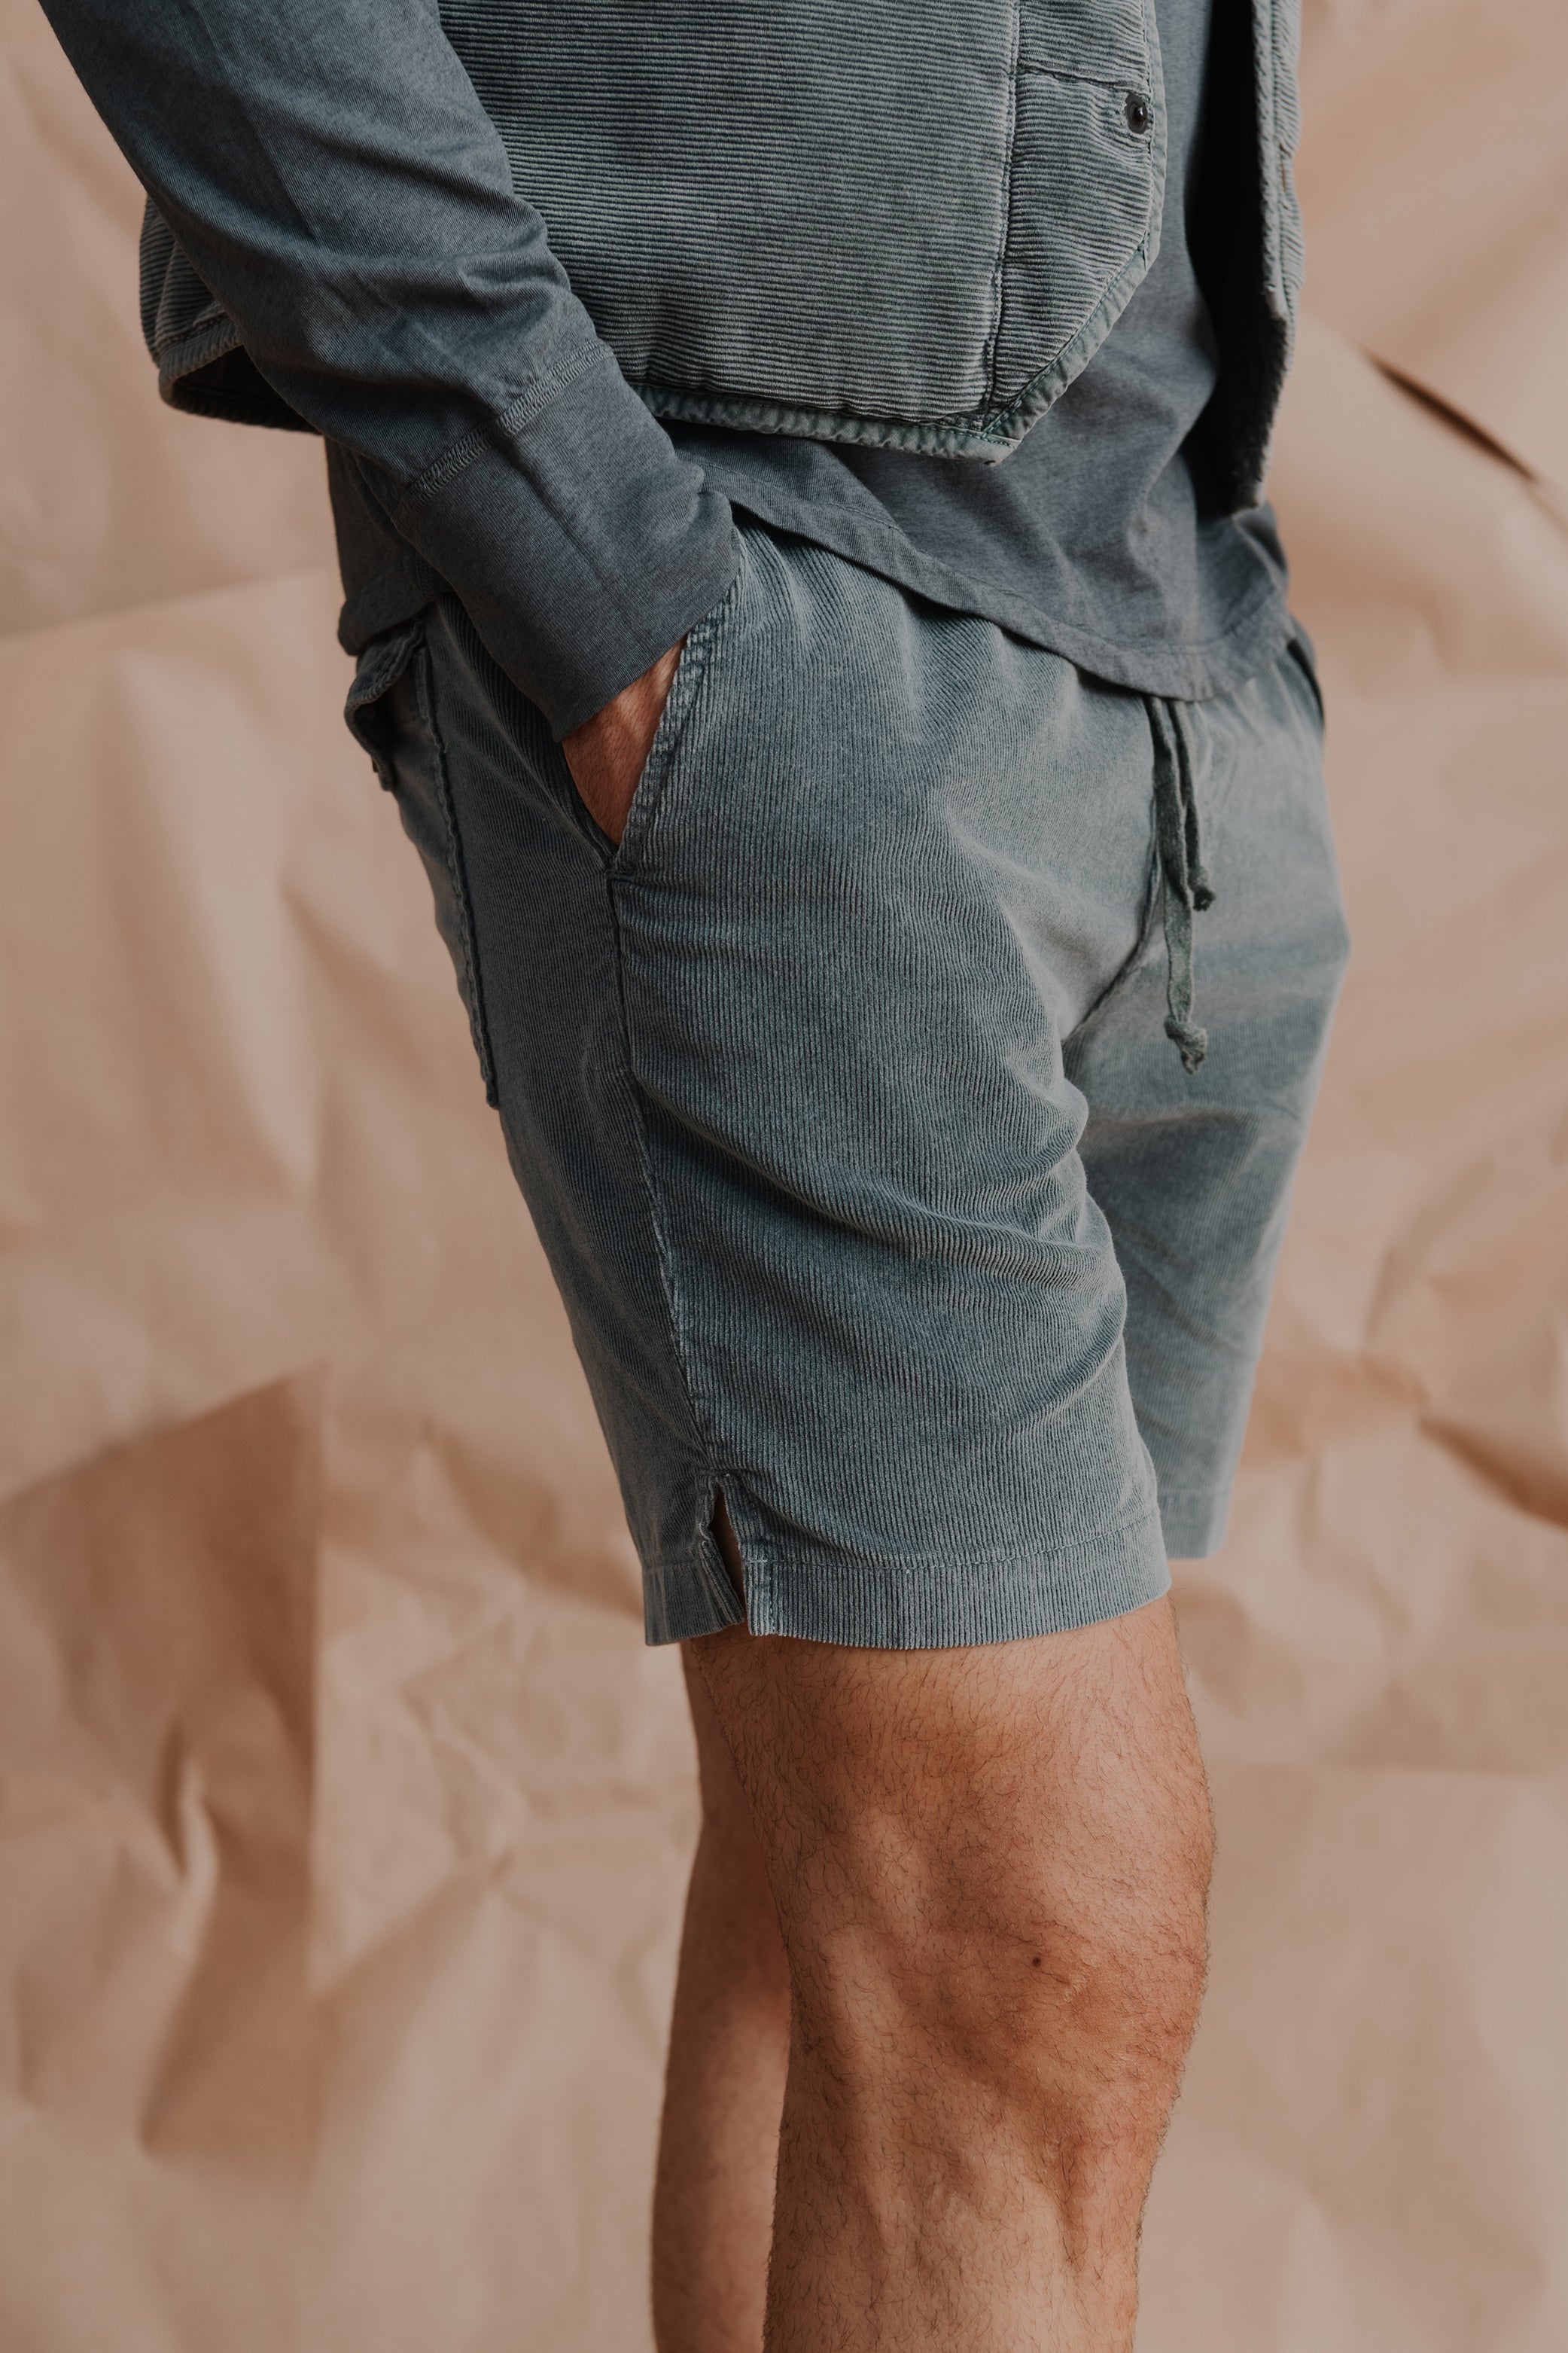 Simply Southern Corduroy Shorts for Men in Khaki Brown